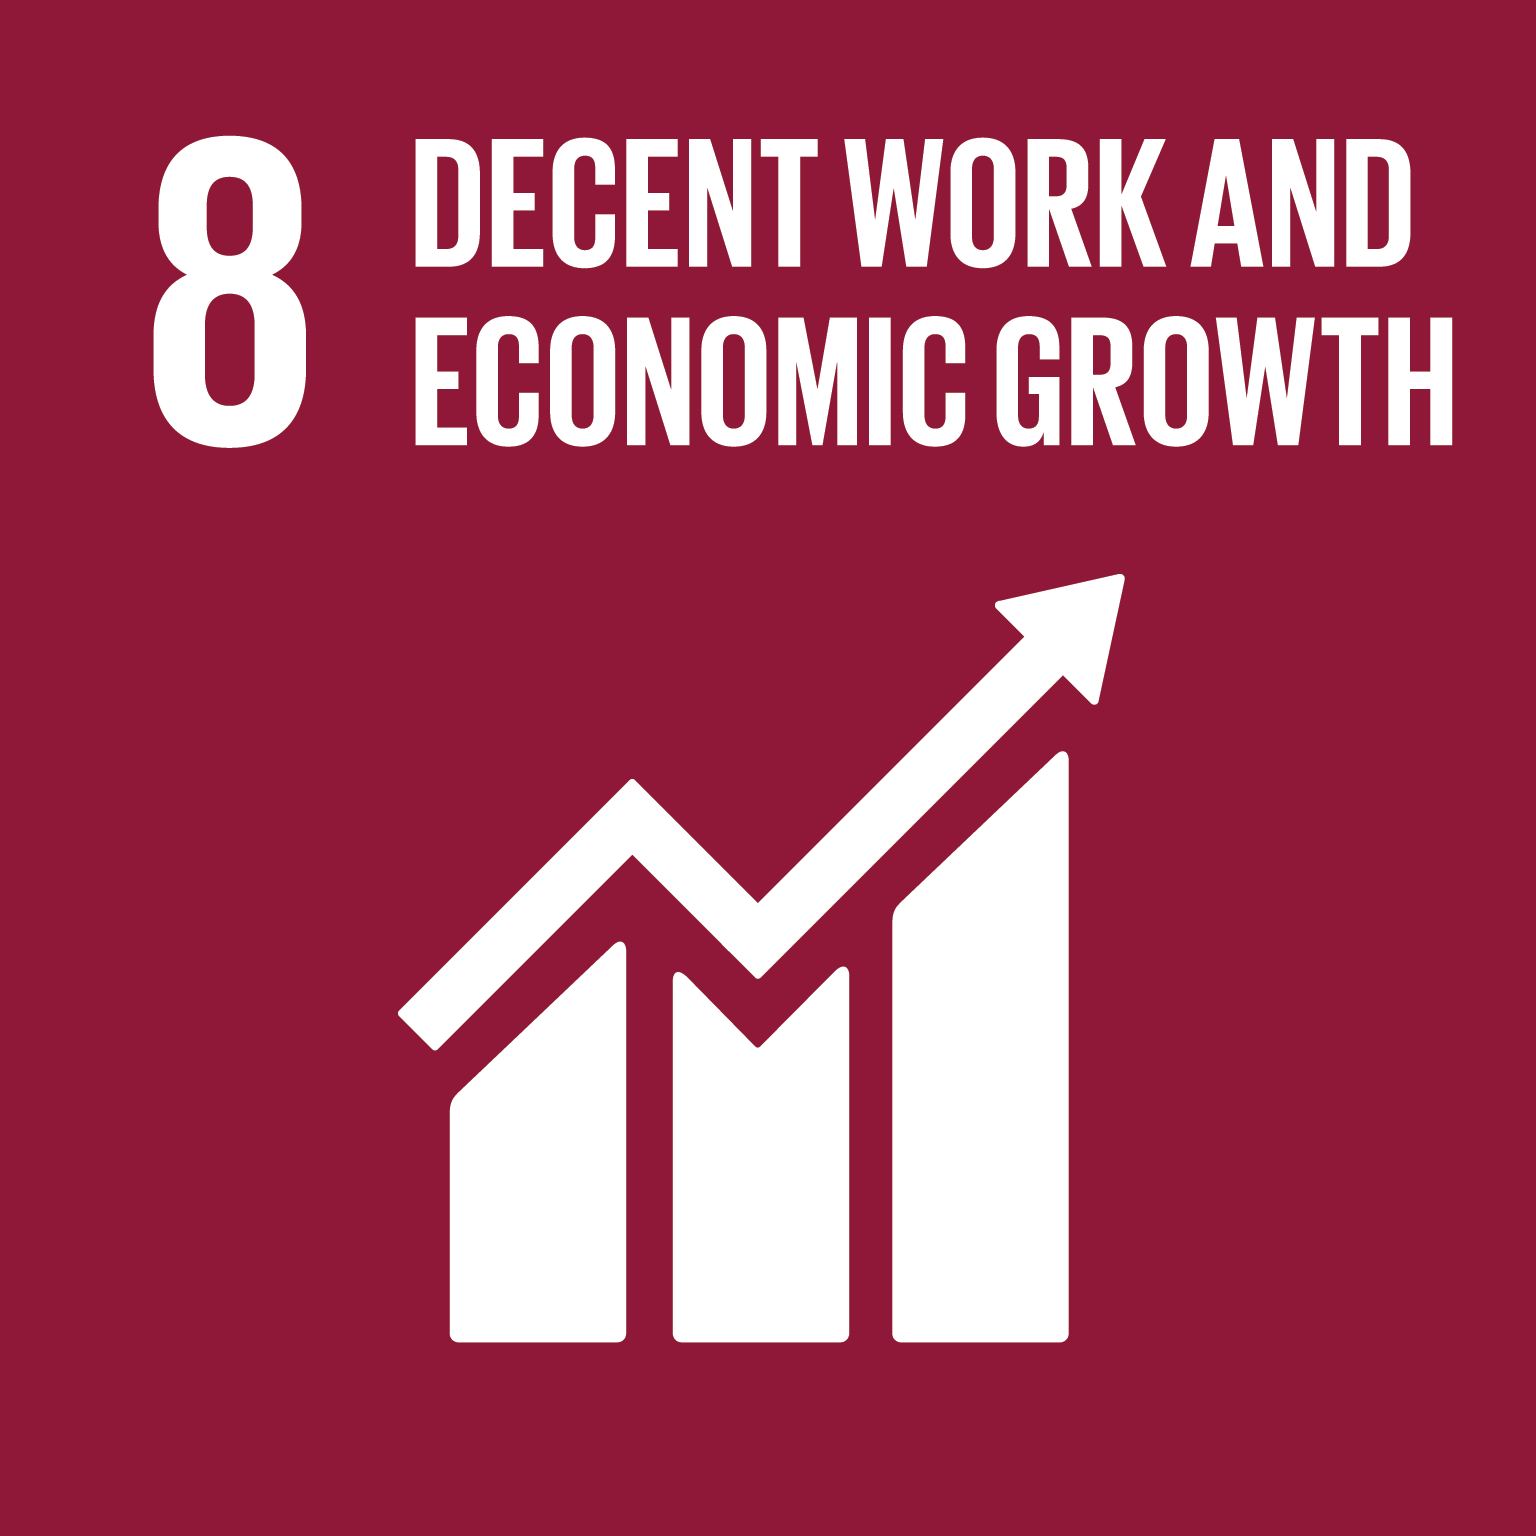 SDG - 8: Decent work and economic growth